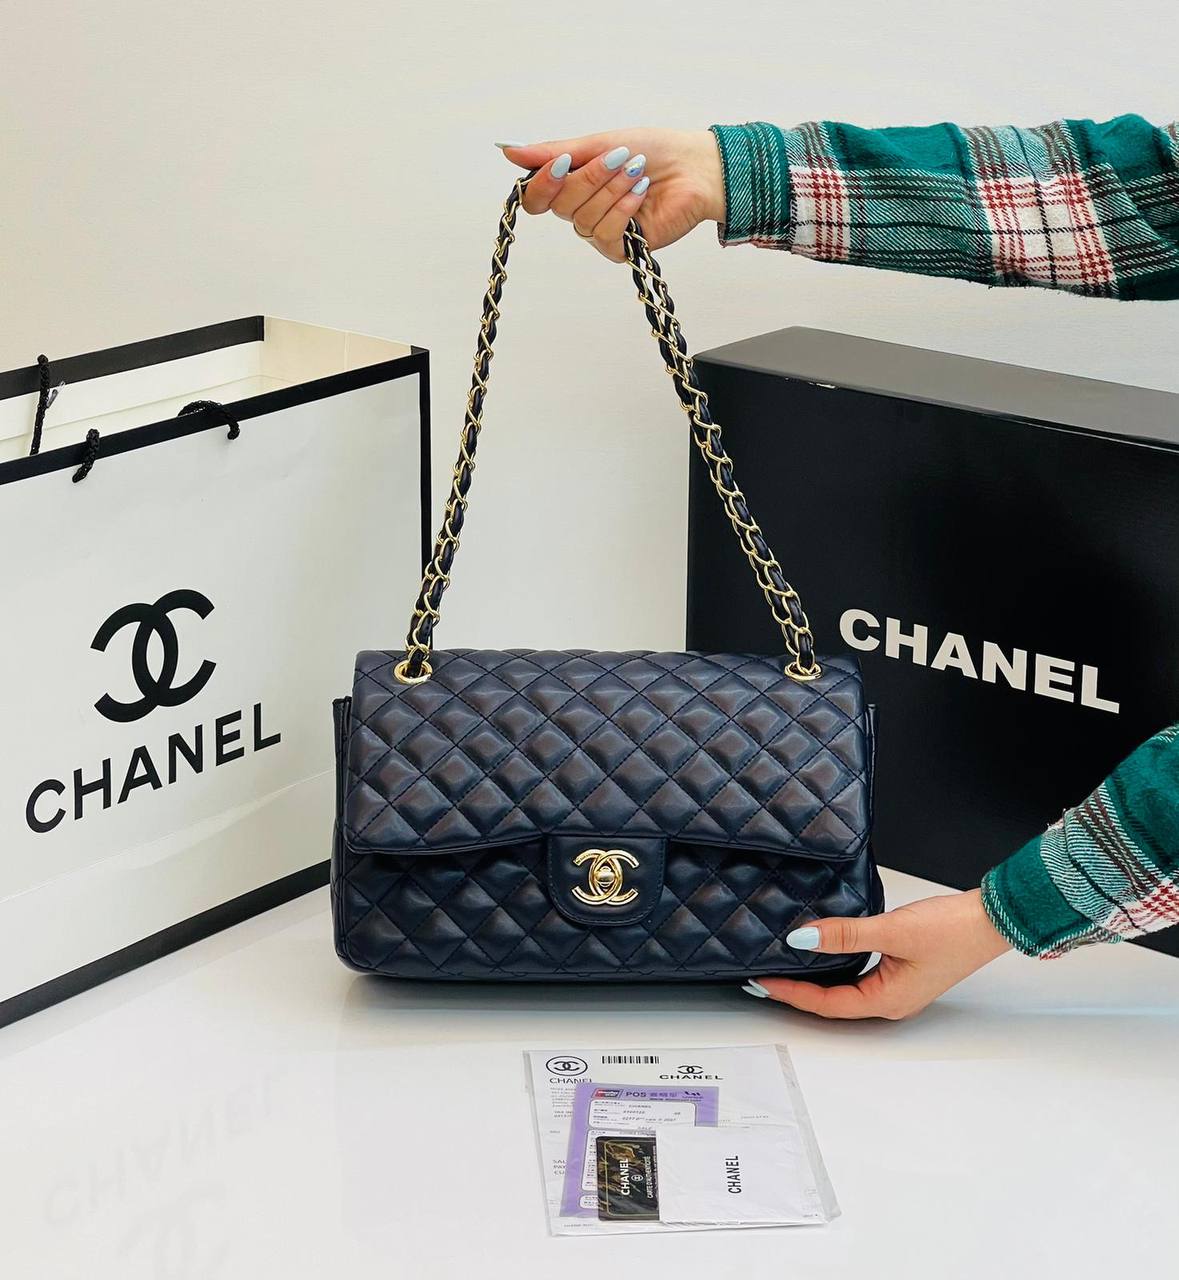 Chanel leather handbags